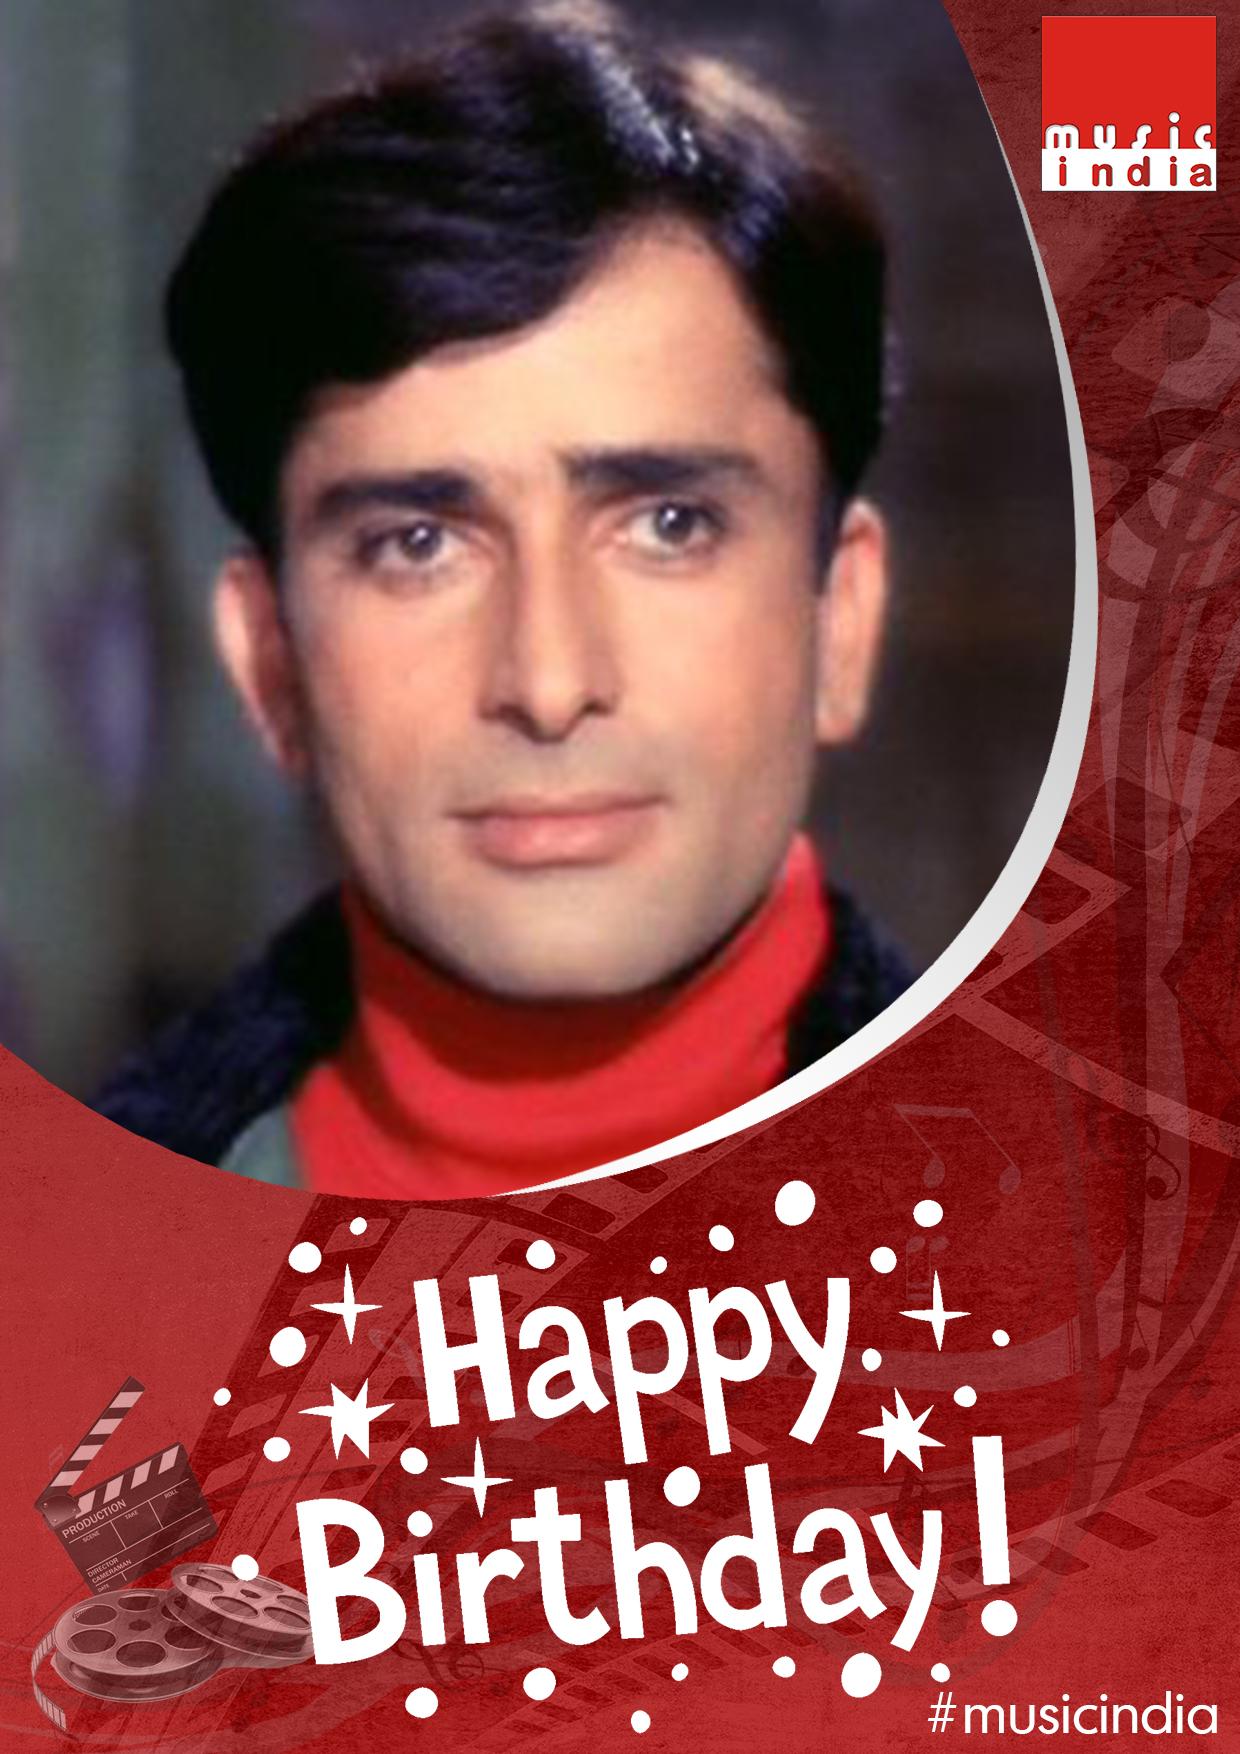  Wishes the Veteran Superstar, Shashi Kapoor, a very Happy Birthday. 